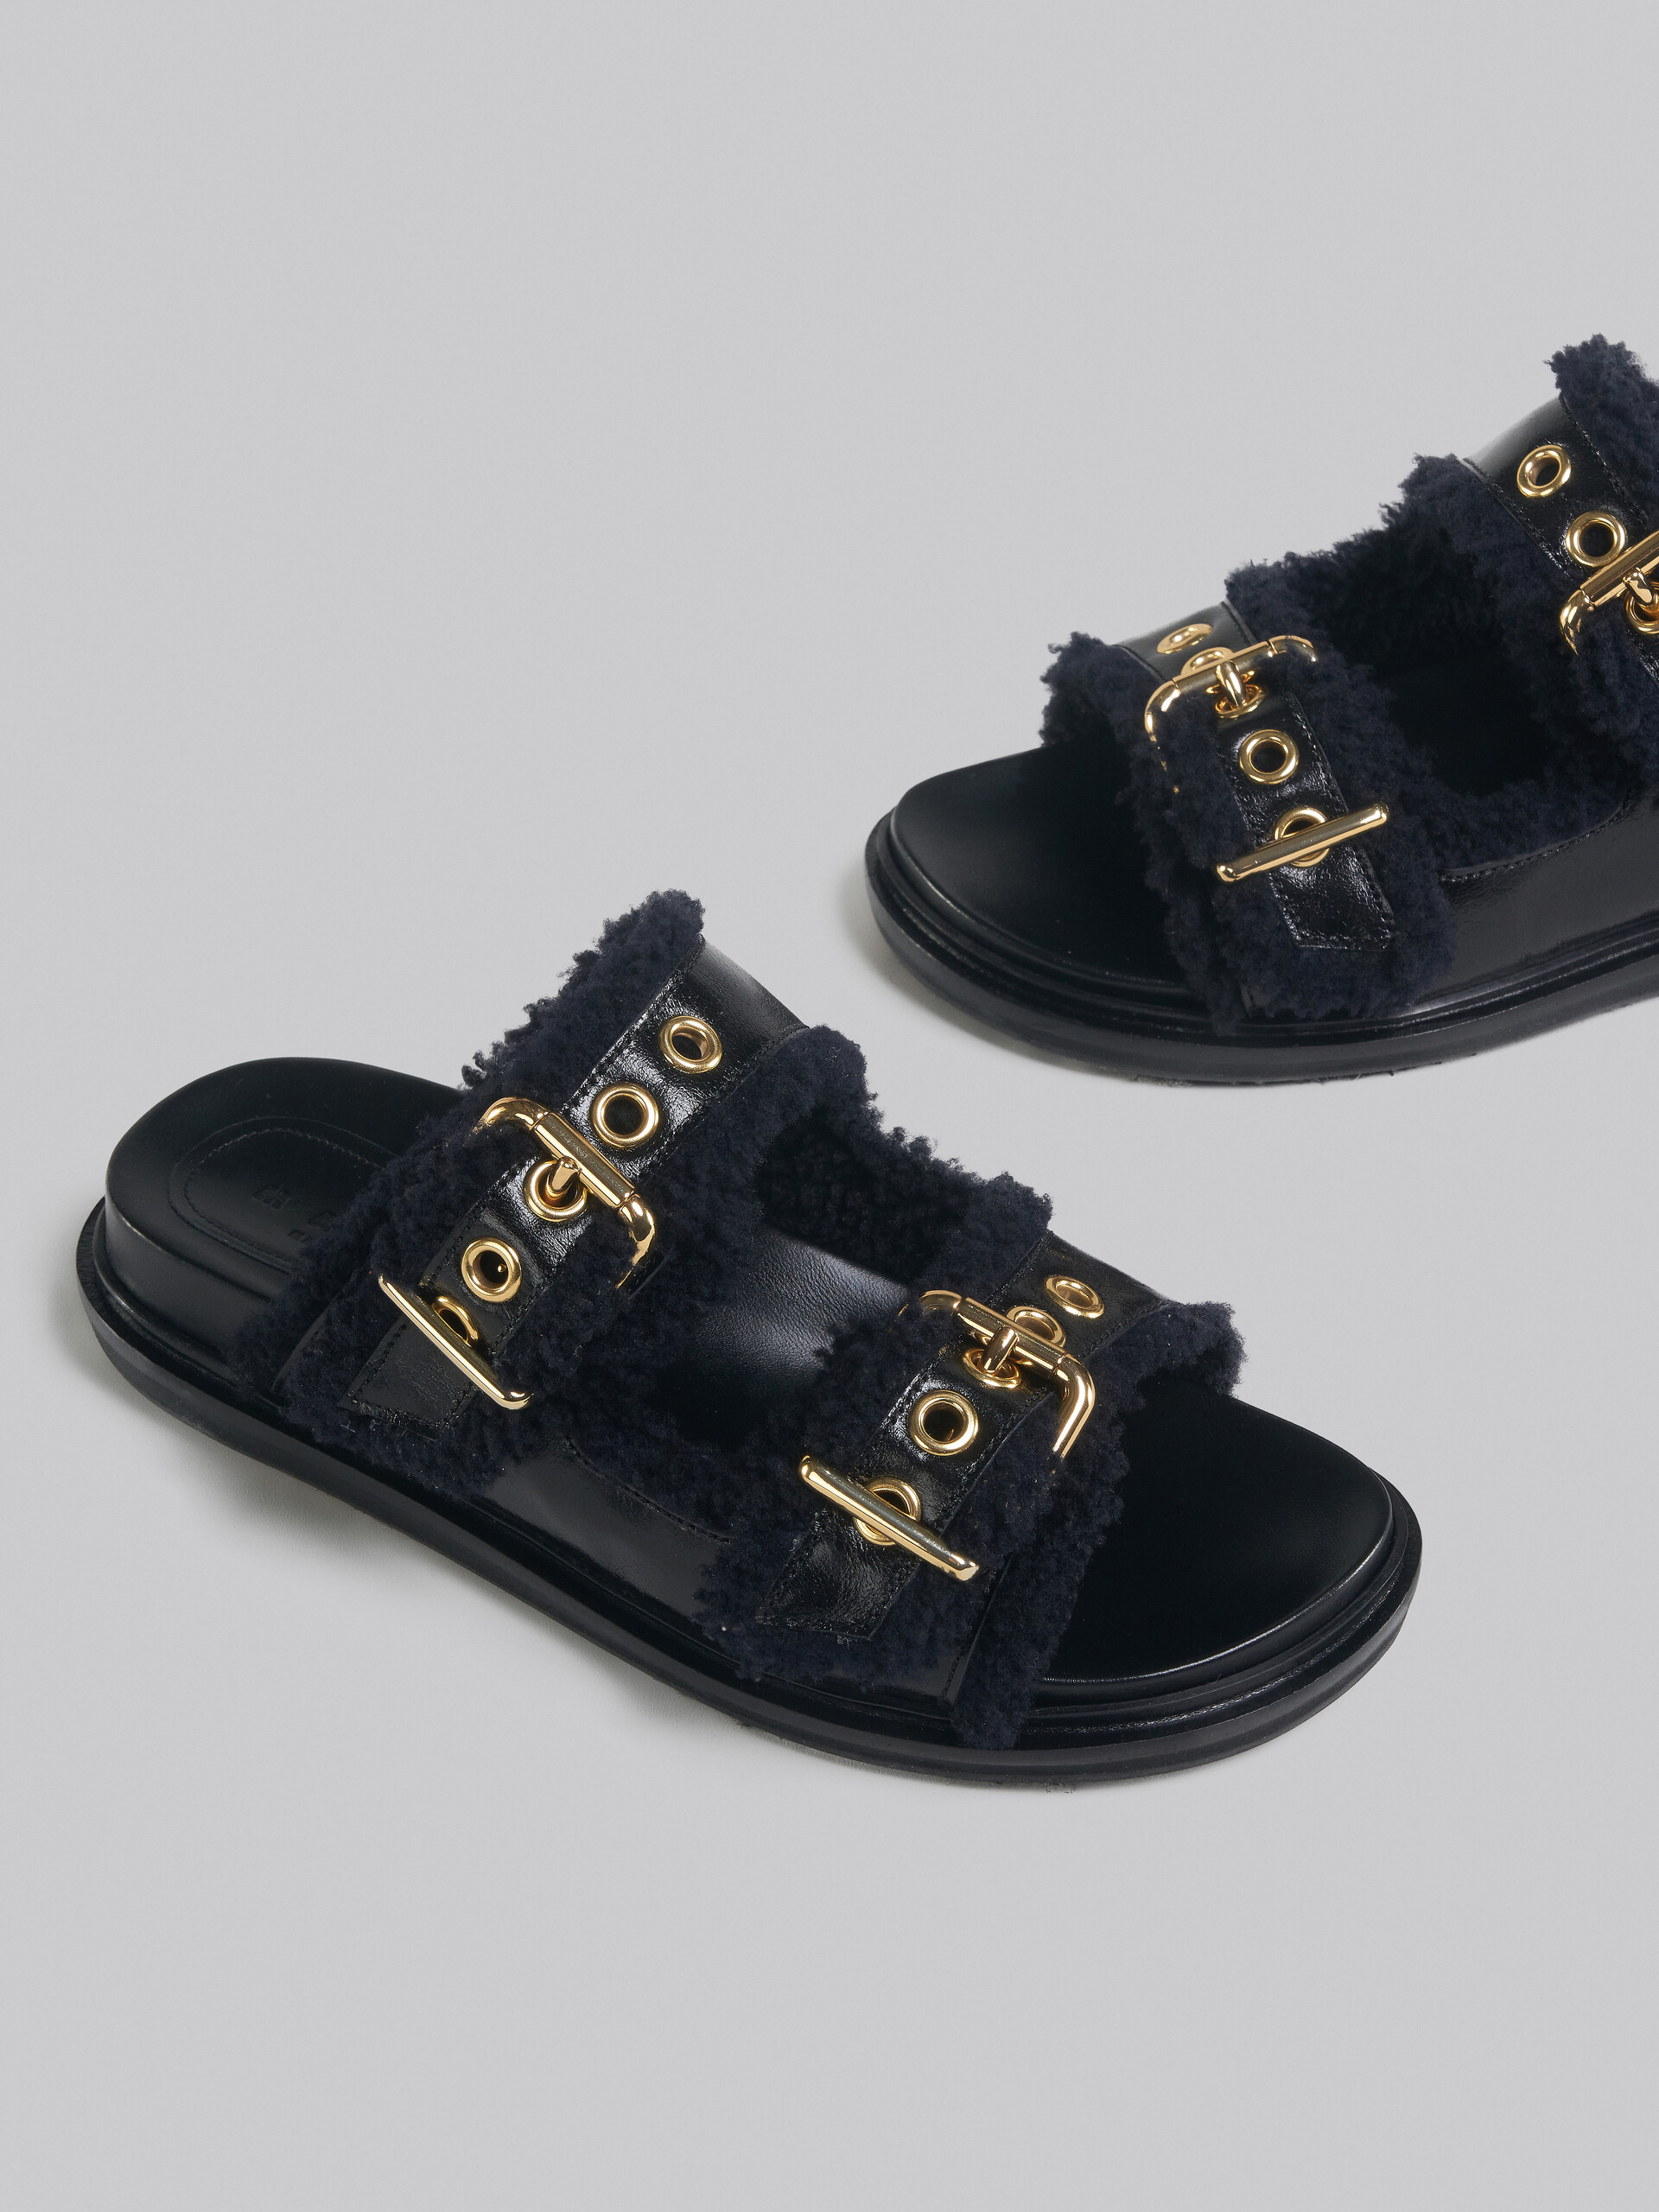 Black leather and merinos Fussbett - Sandals - Image 5